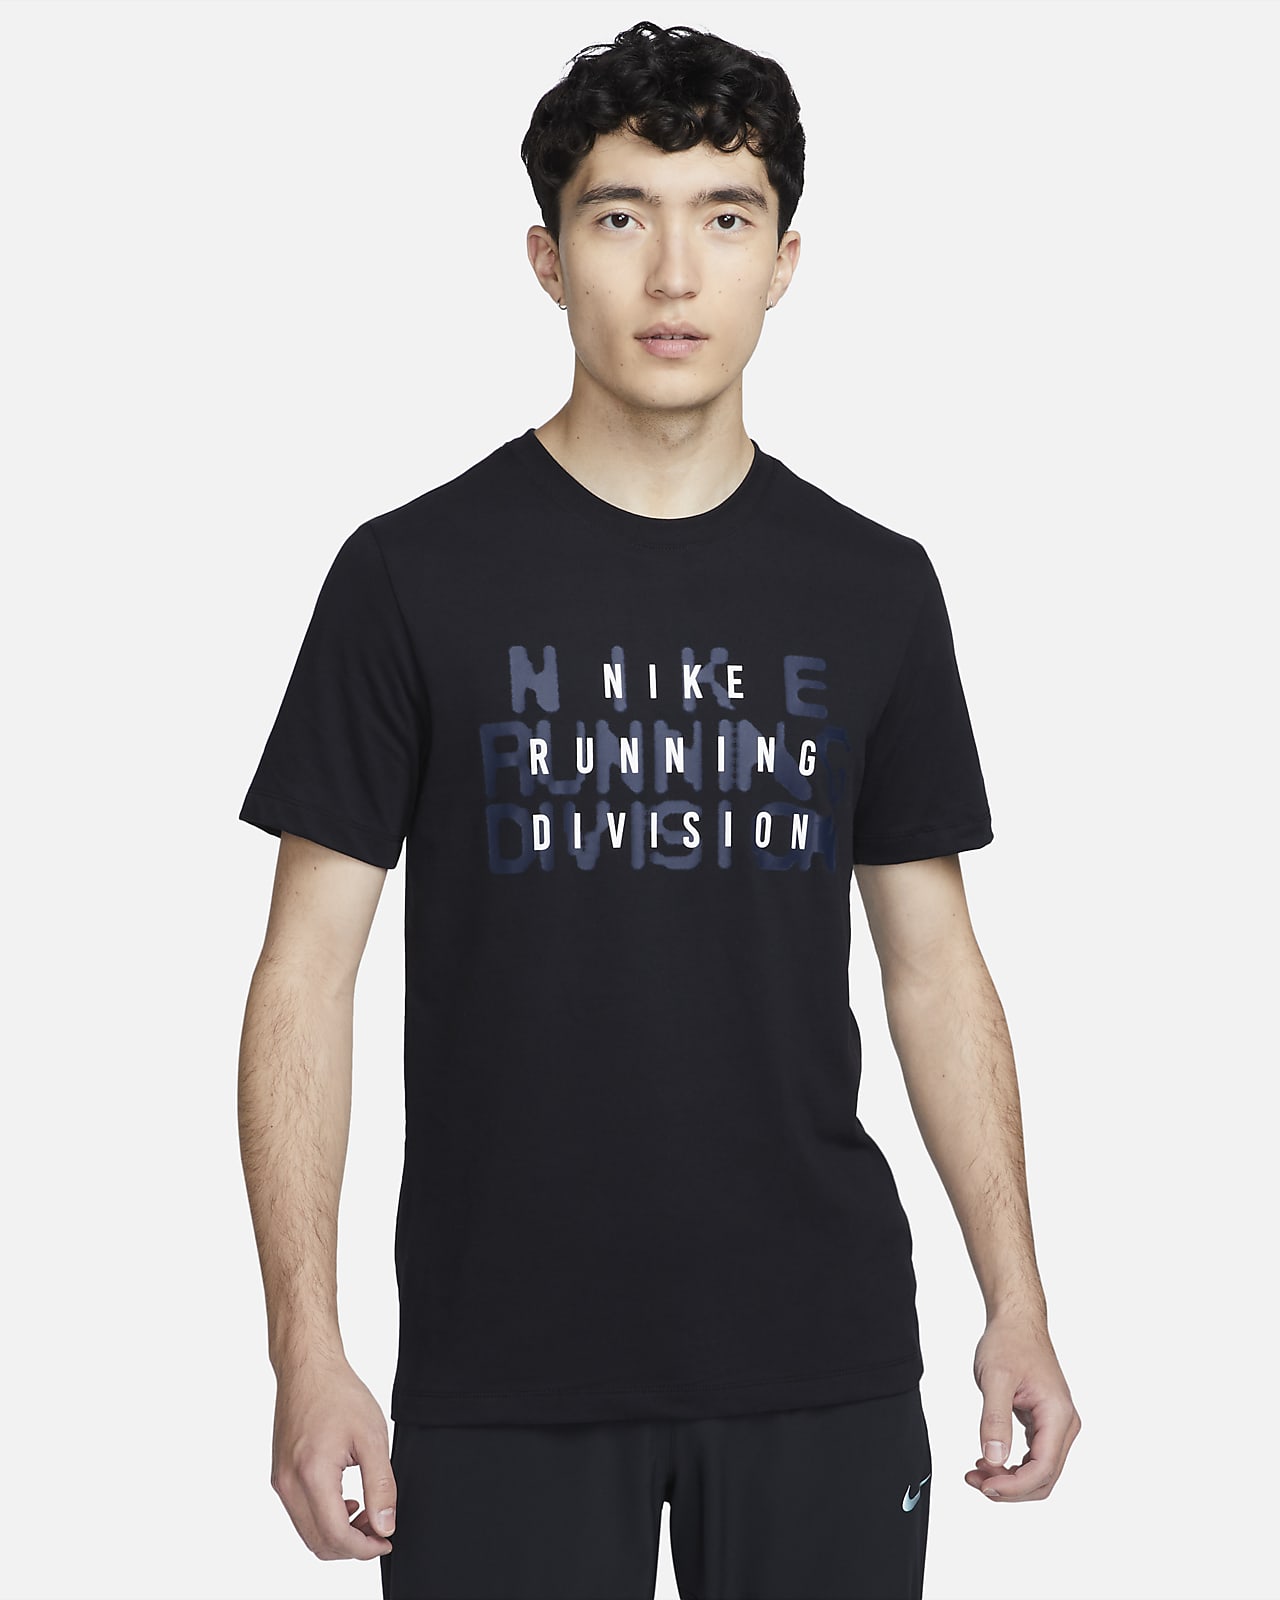 Nike Dri-FIT Run Division Men's Running T-Shirt